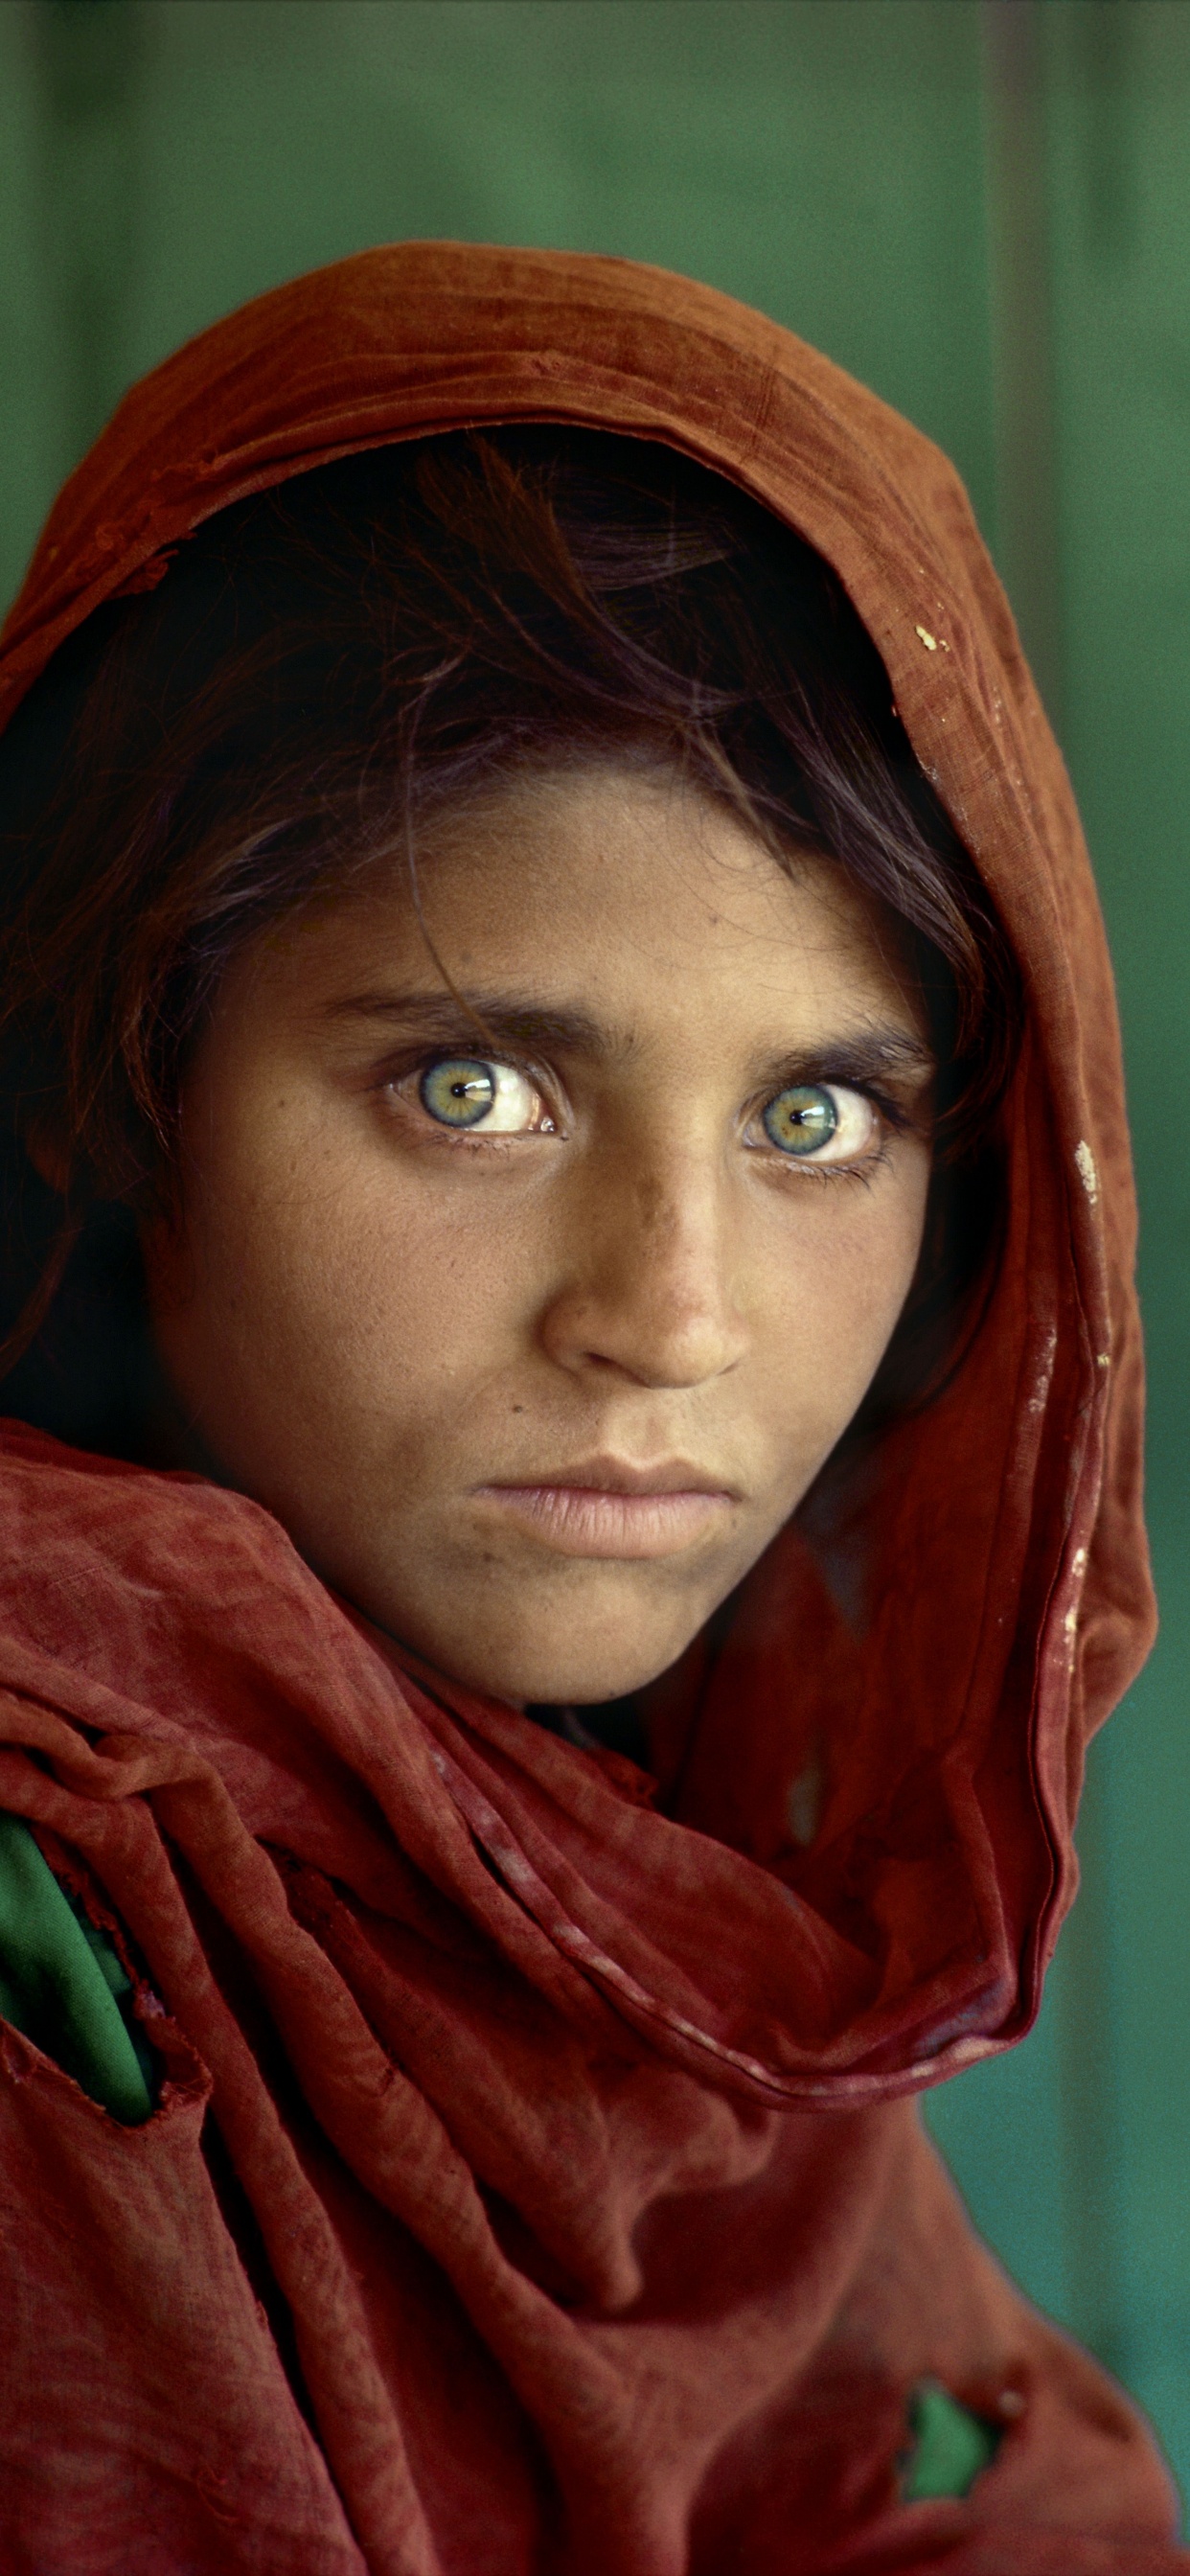 Afghanisches Mädchen, Afghanistan, National Geographic, Gesicht, Auge. Wallpaper in 1242x2688 Resolution